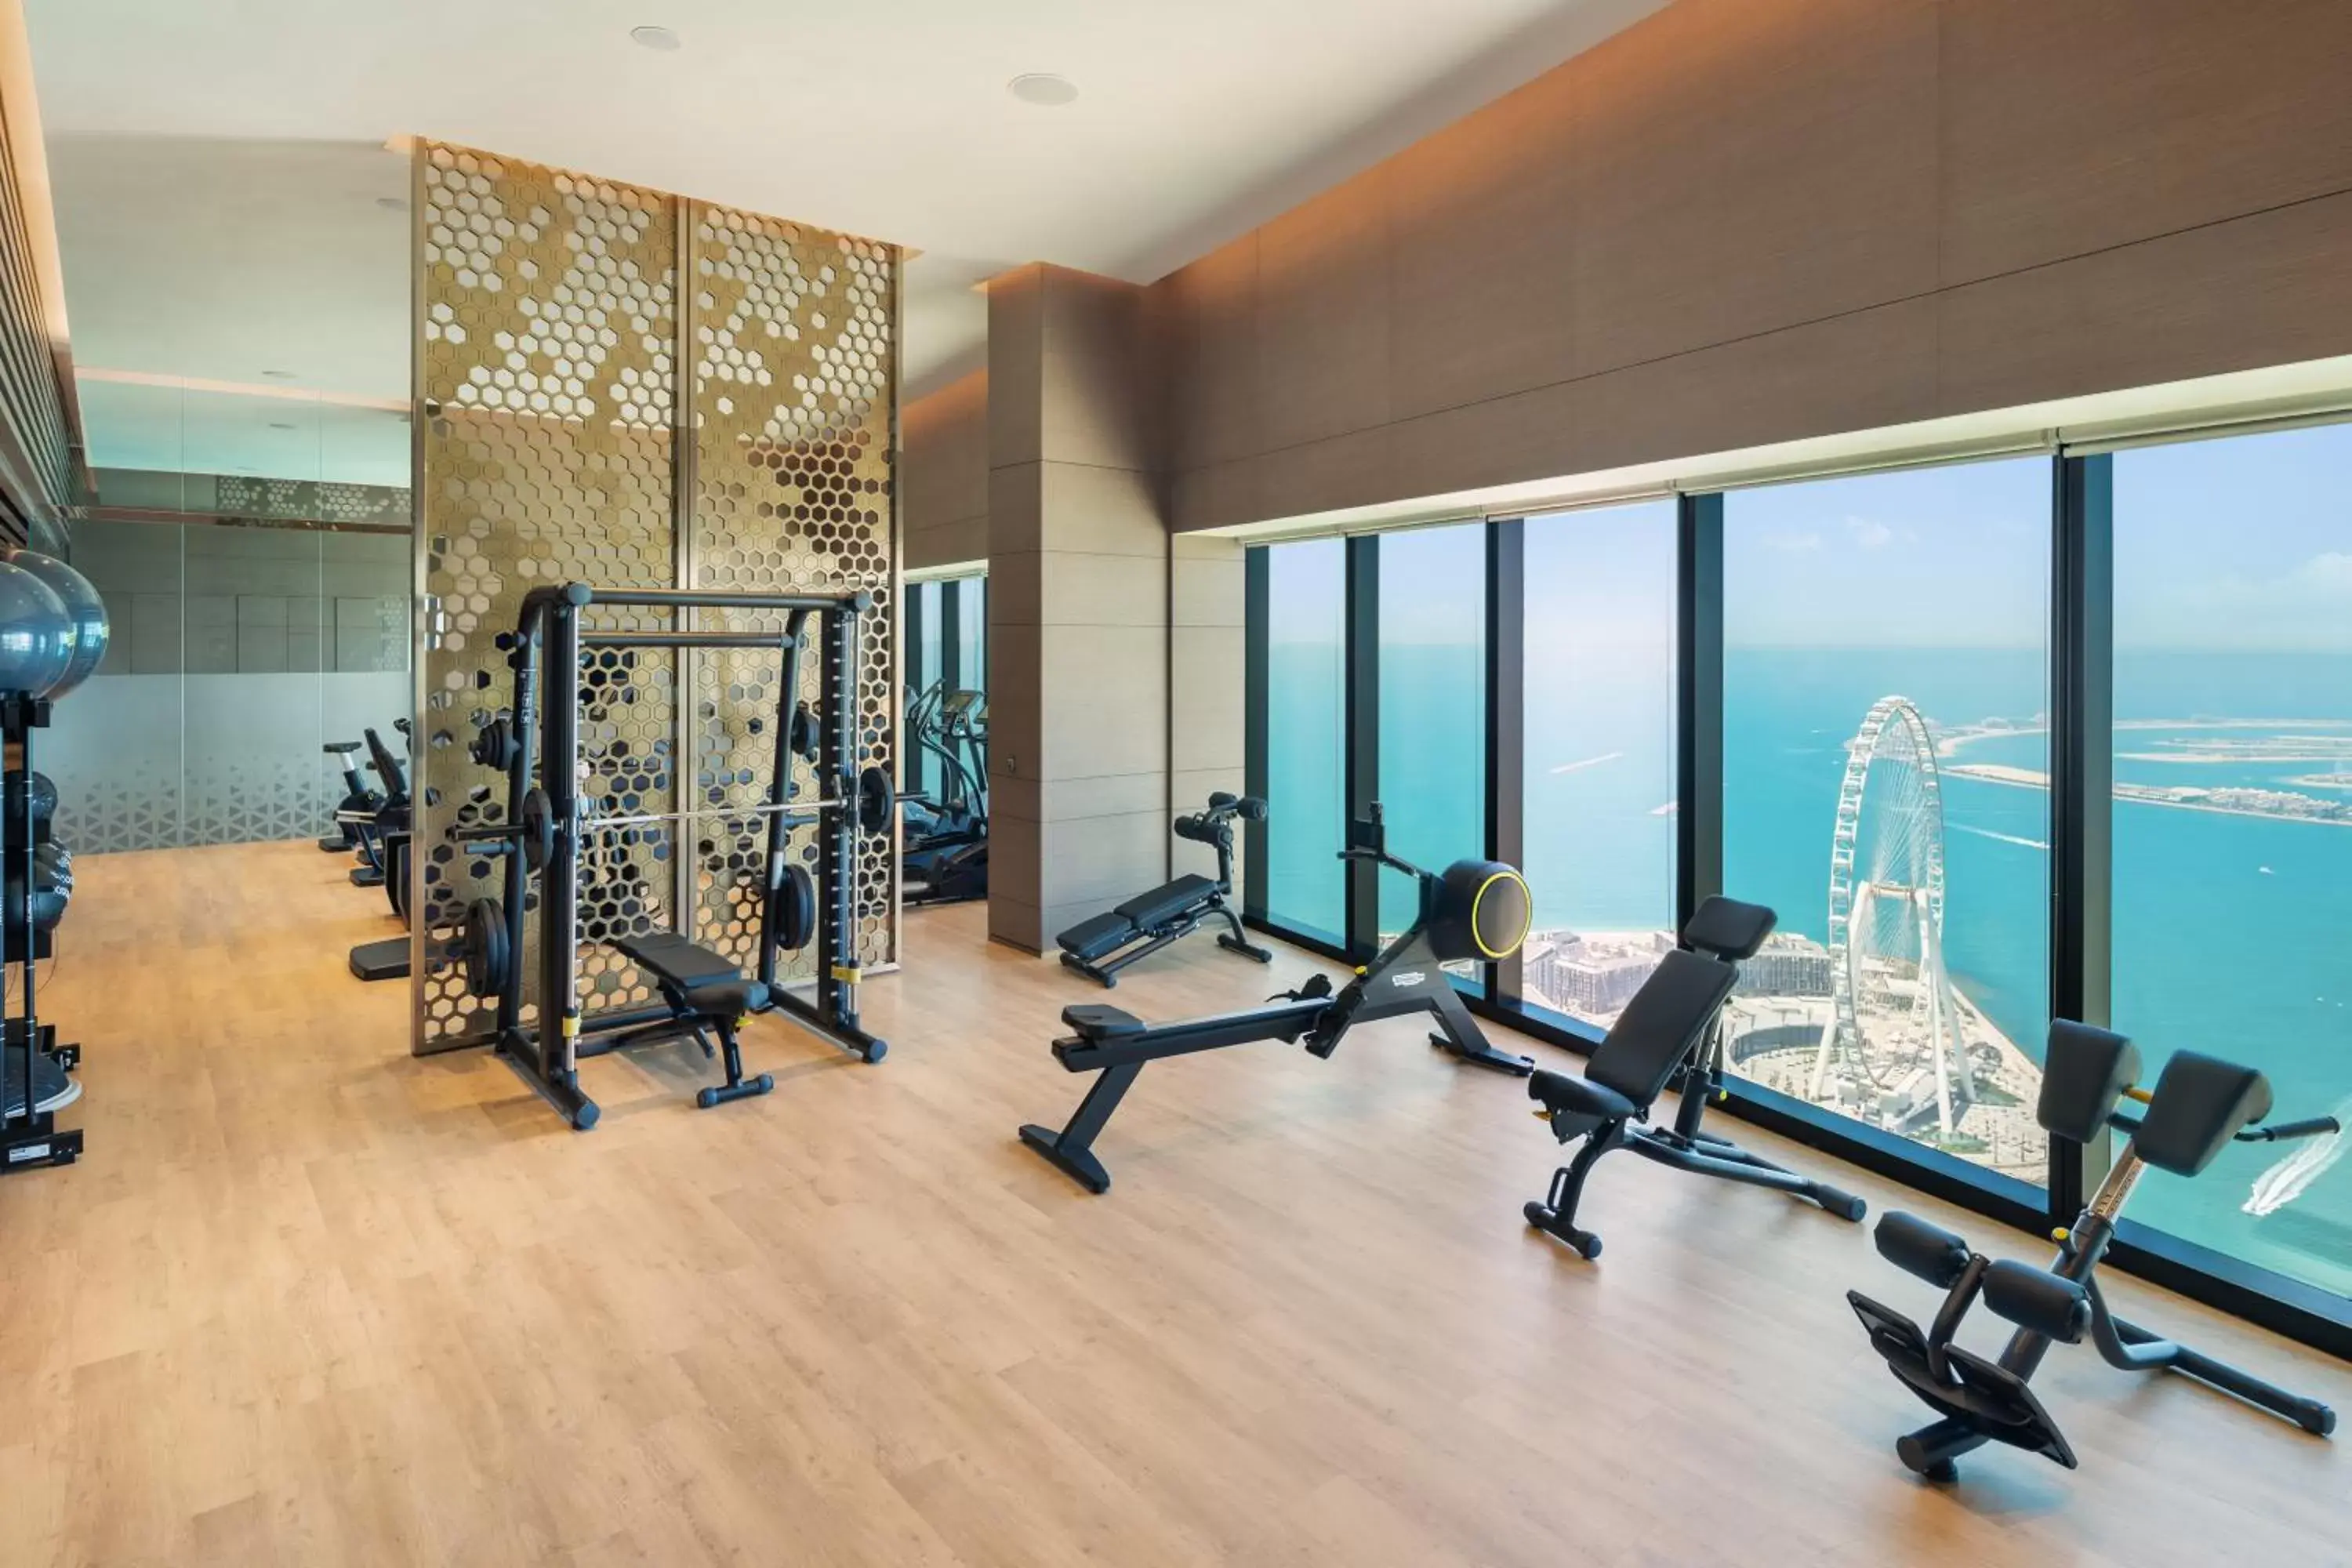 Fitness centre/facilities, Fitness Center/Facilities in Address Beach Resort